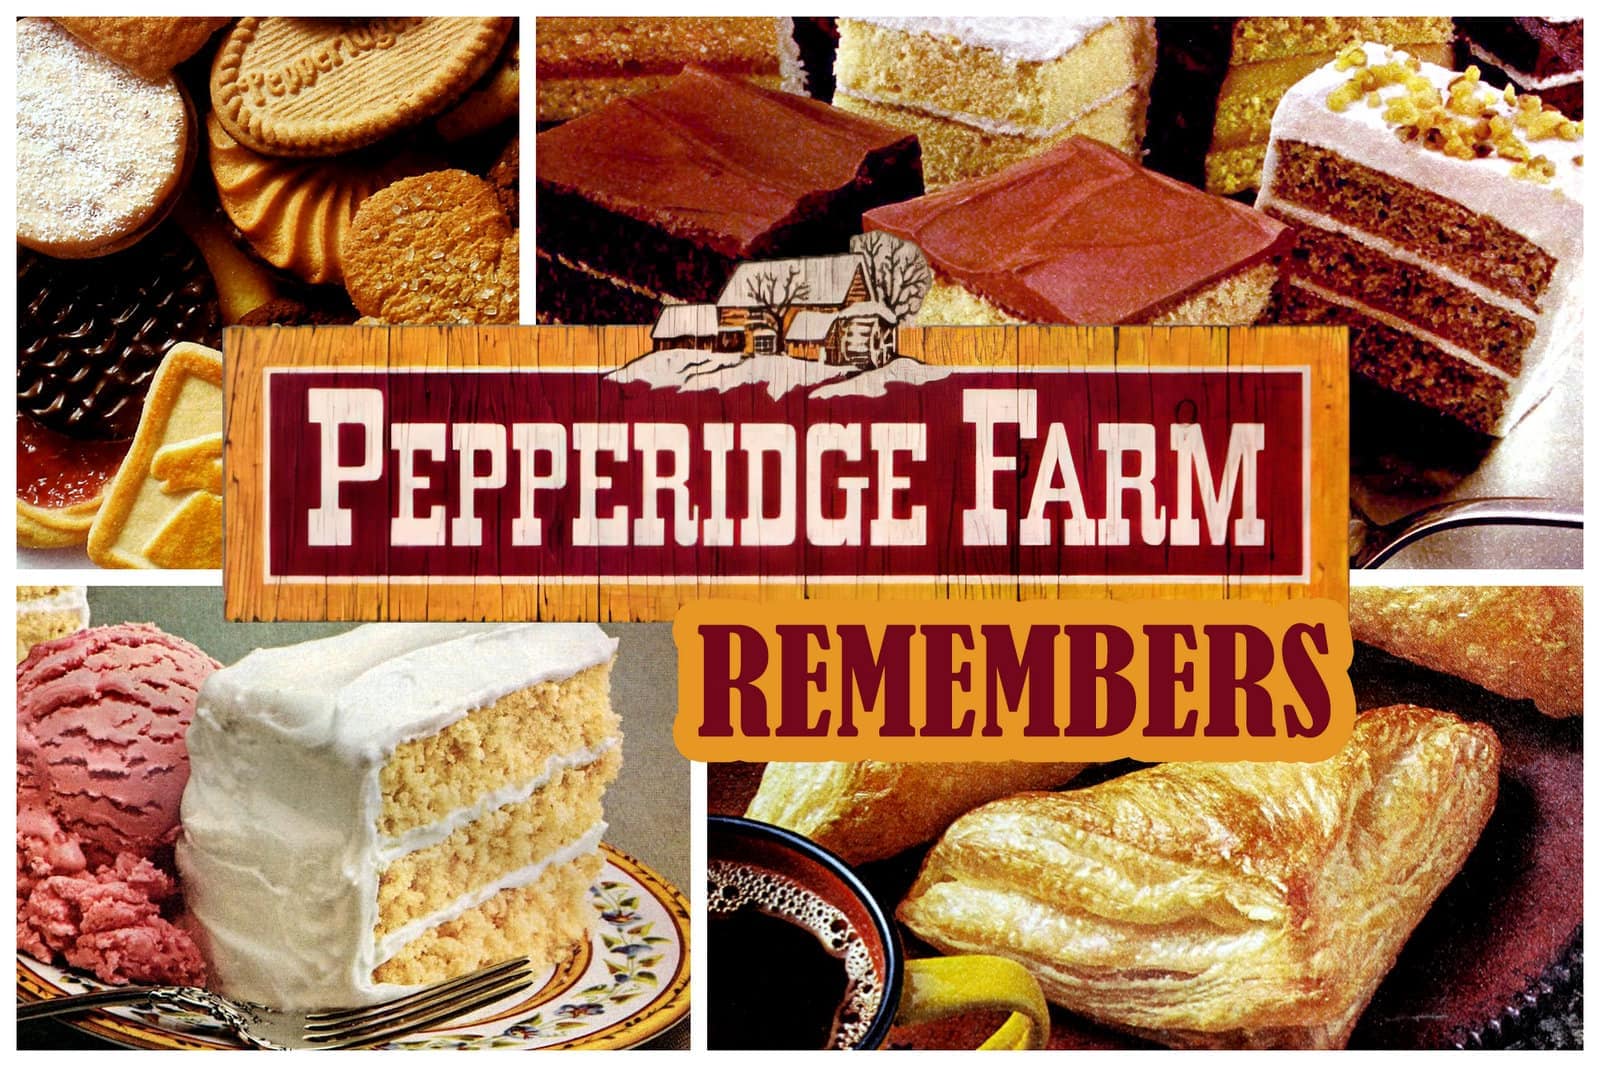 Pepperidge-Farm-remembers.jpg